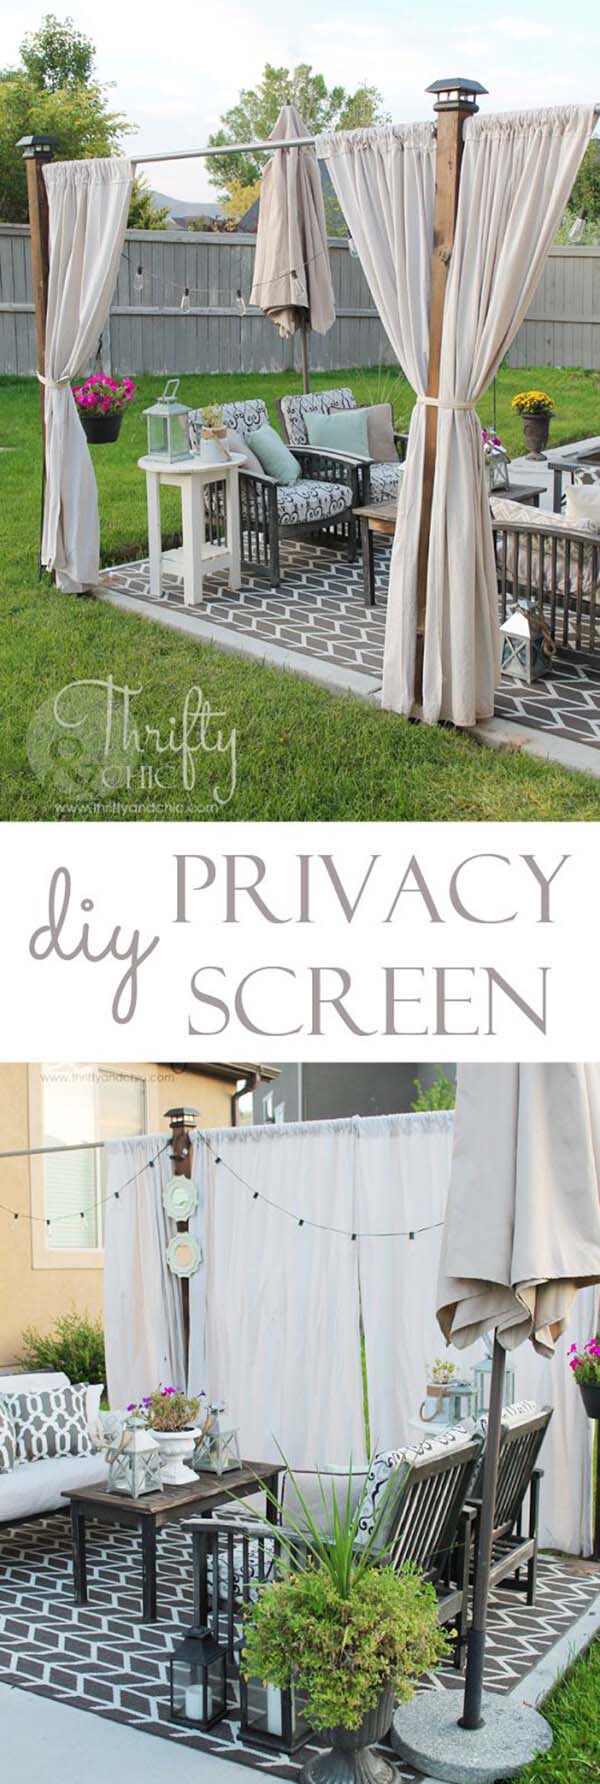 Backyard Shade and Privacy Curtains #diy #sunshade #patio #backyard #pergola #decorhomeideas